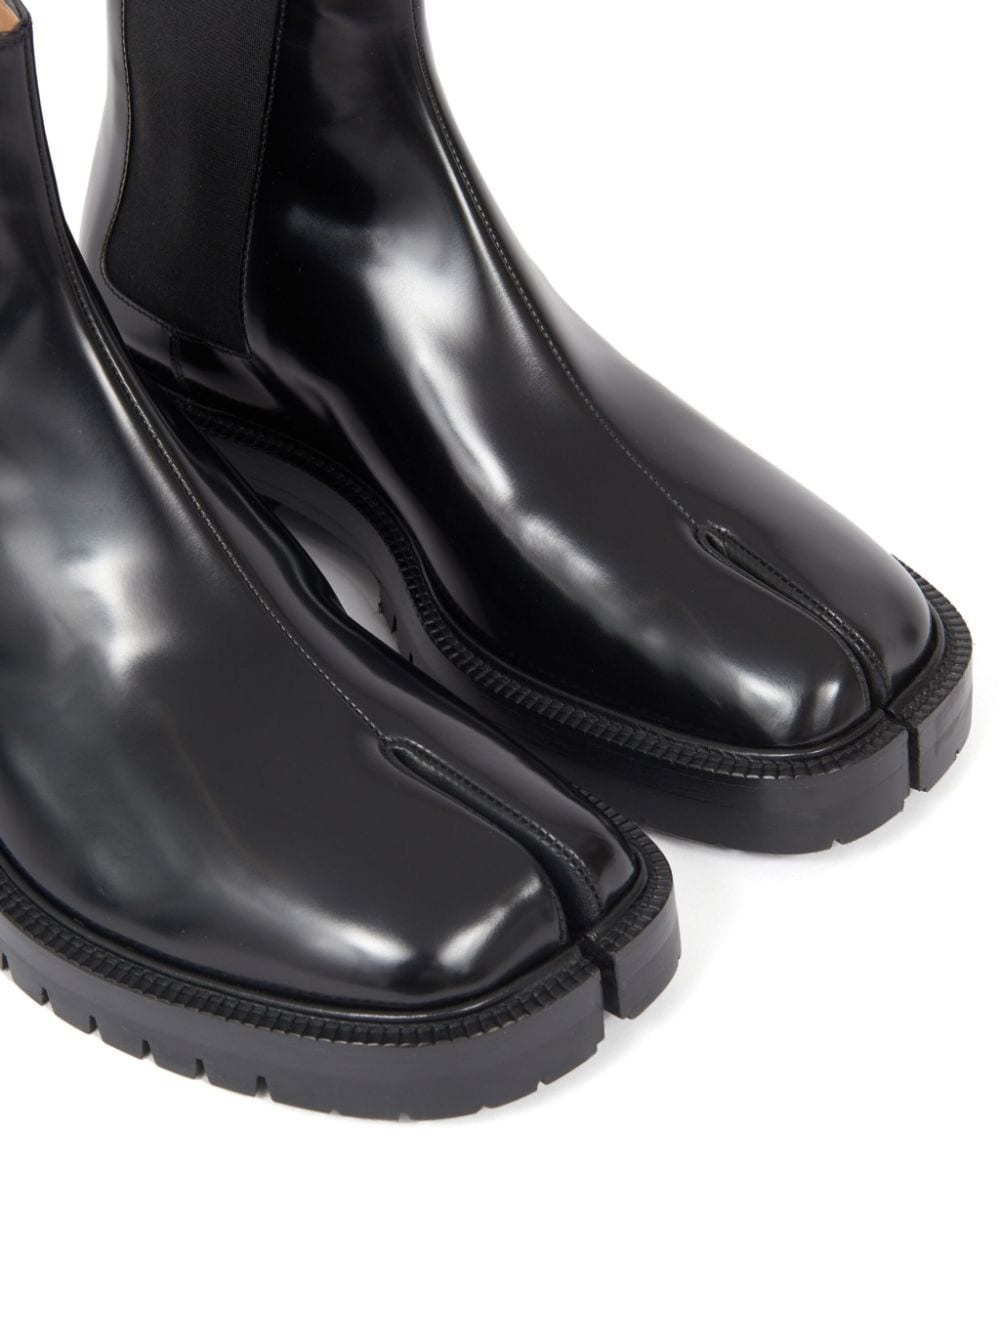 Tabi leather boots - 4